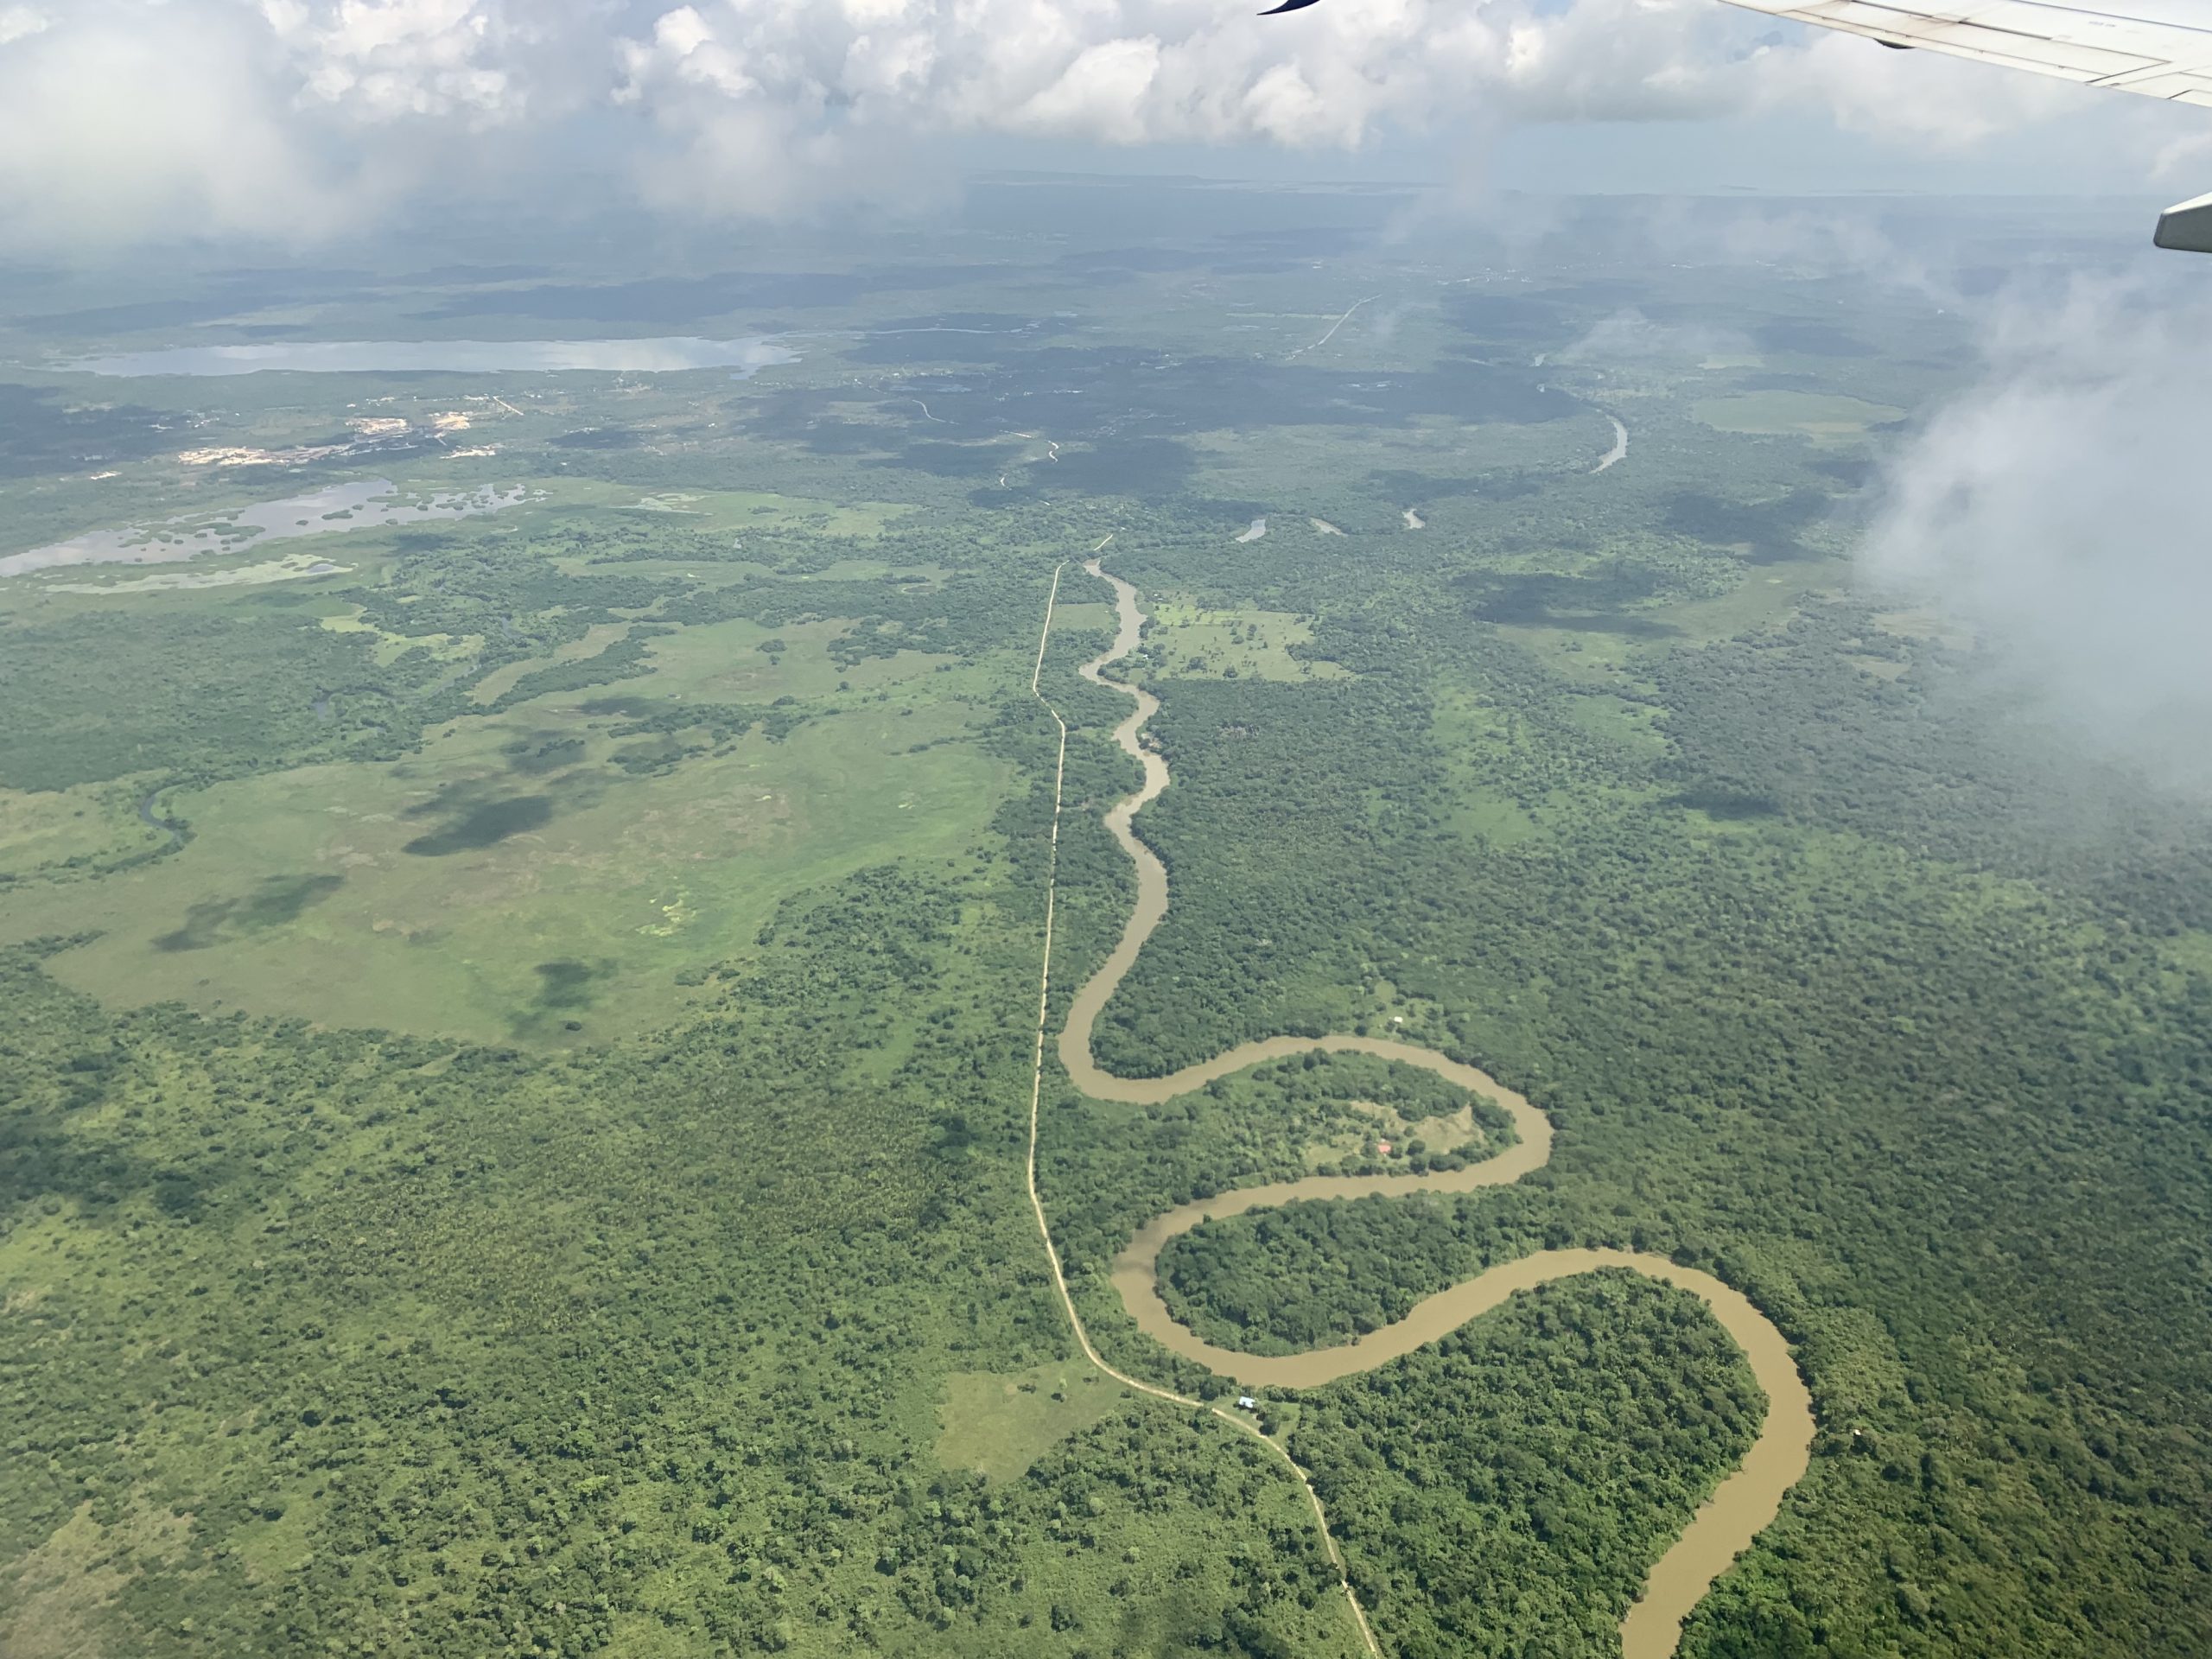 plane arrival over river and green landscape in belize central america